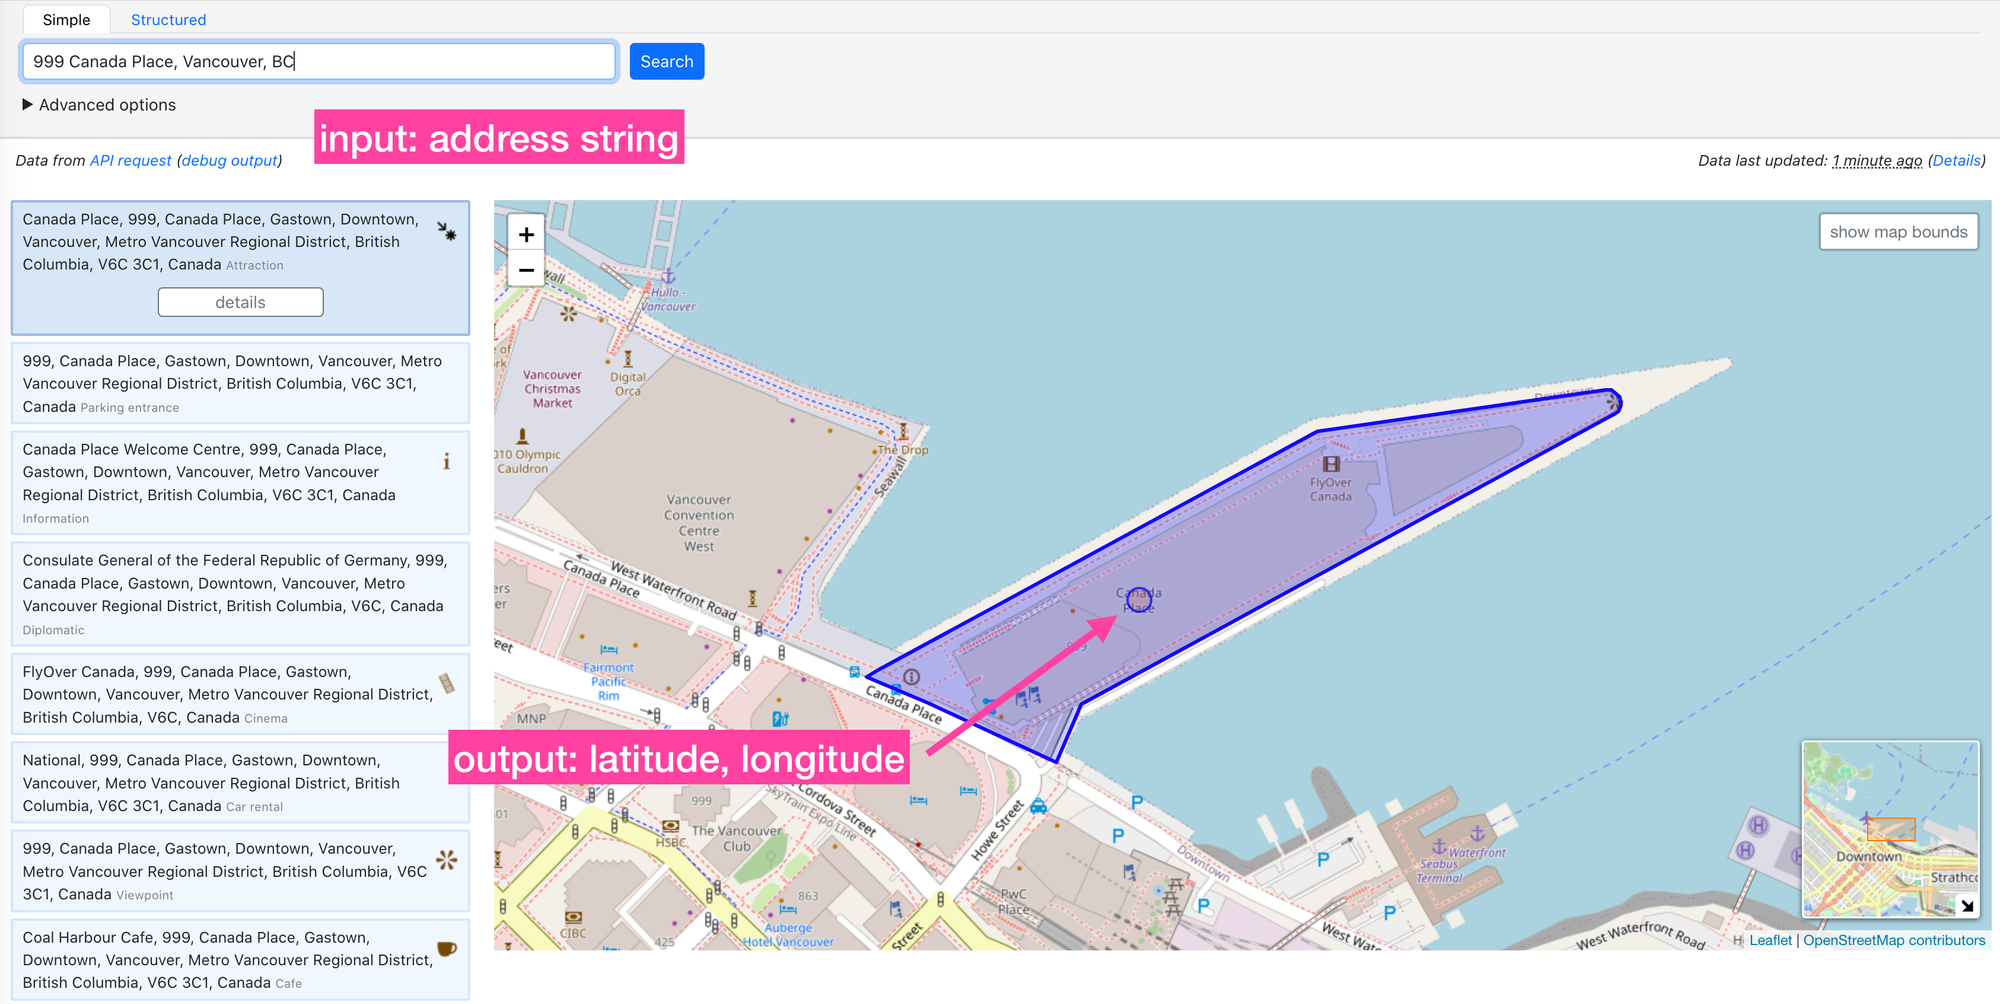 OpenStreetMap OSM Nominatim API tutorial